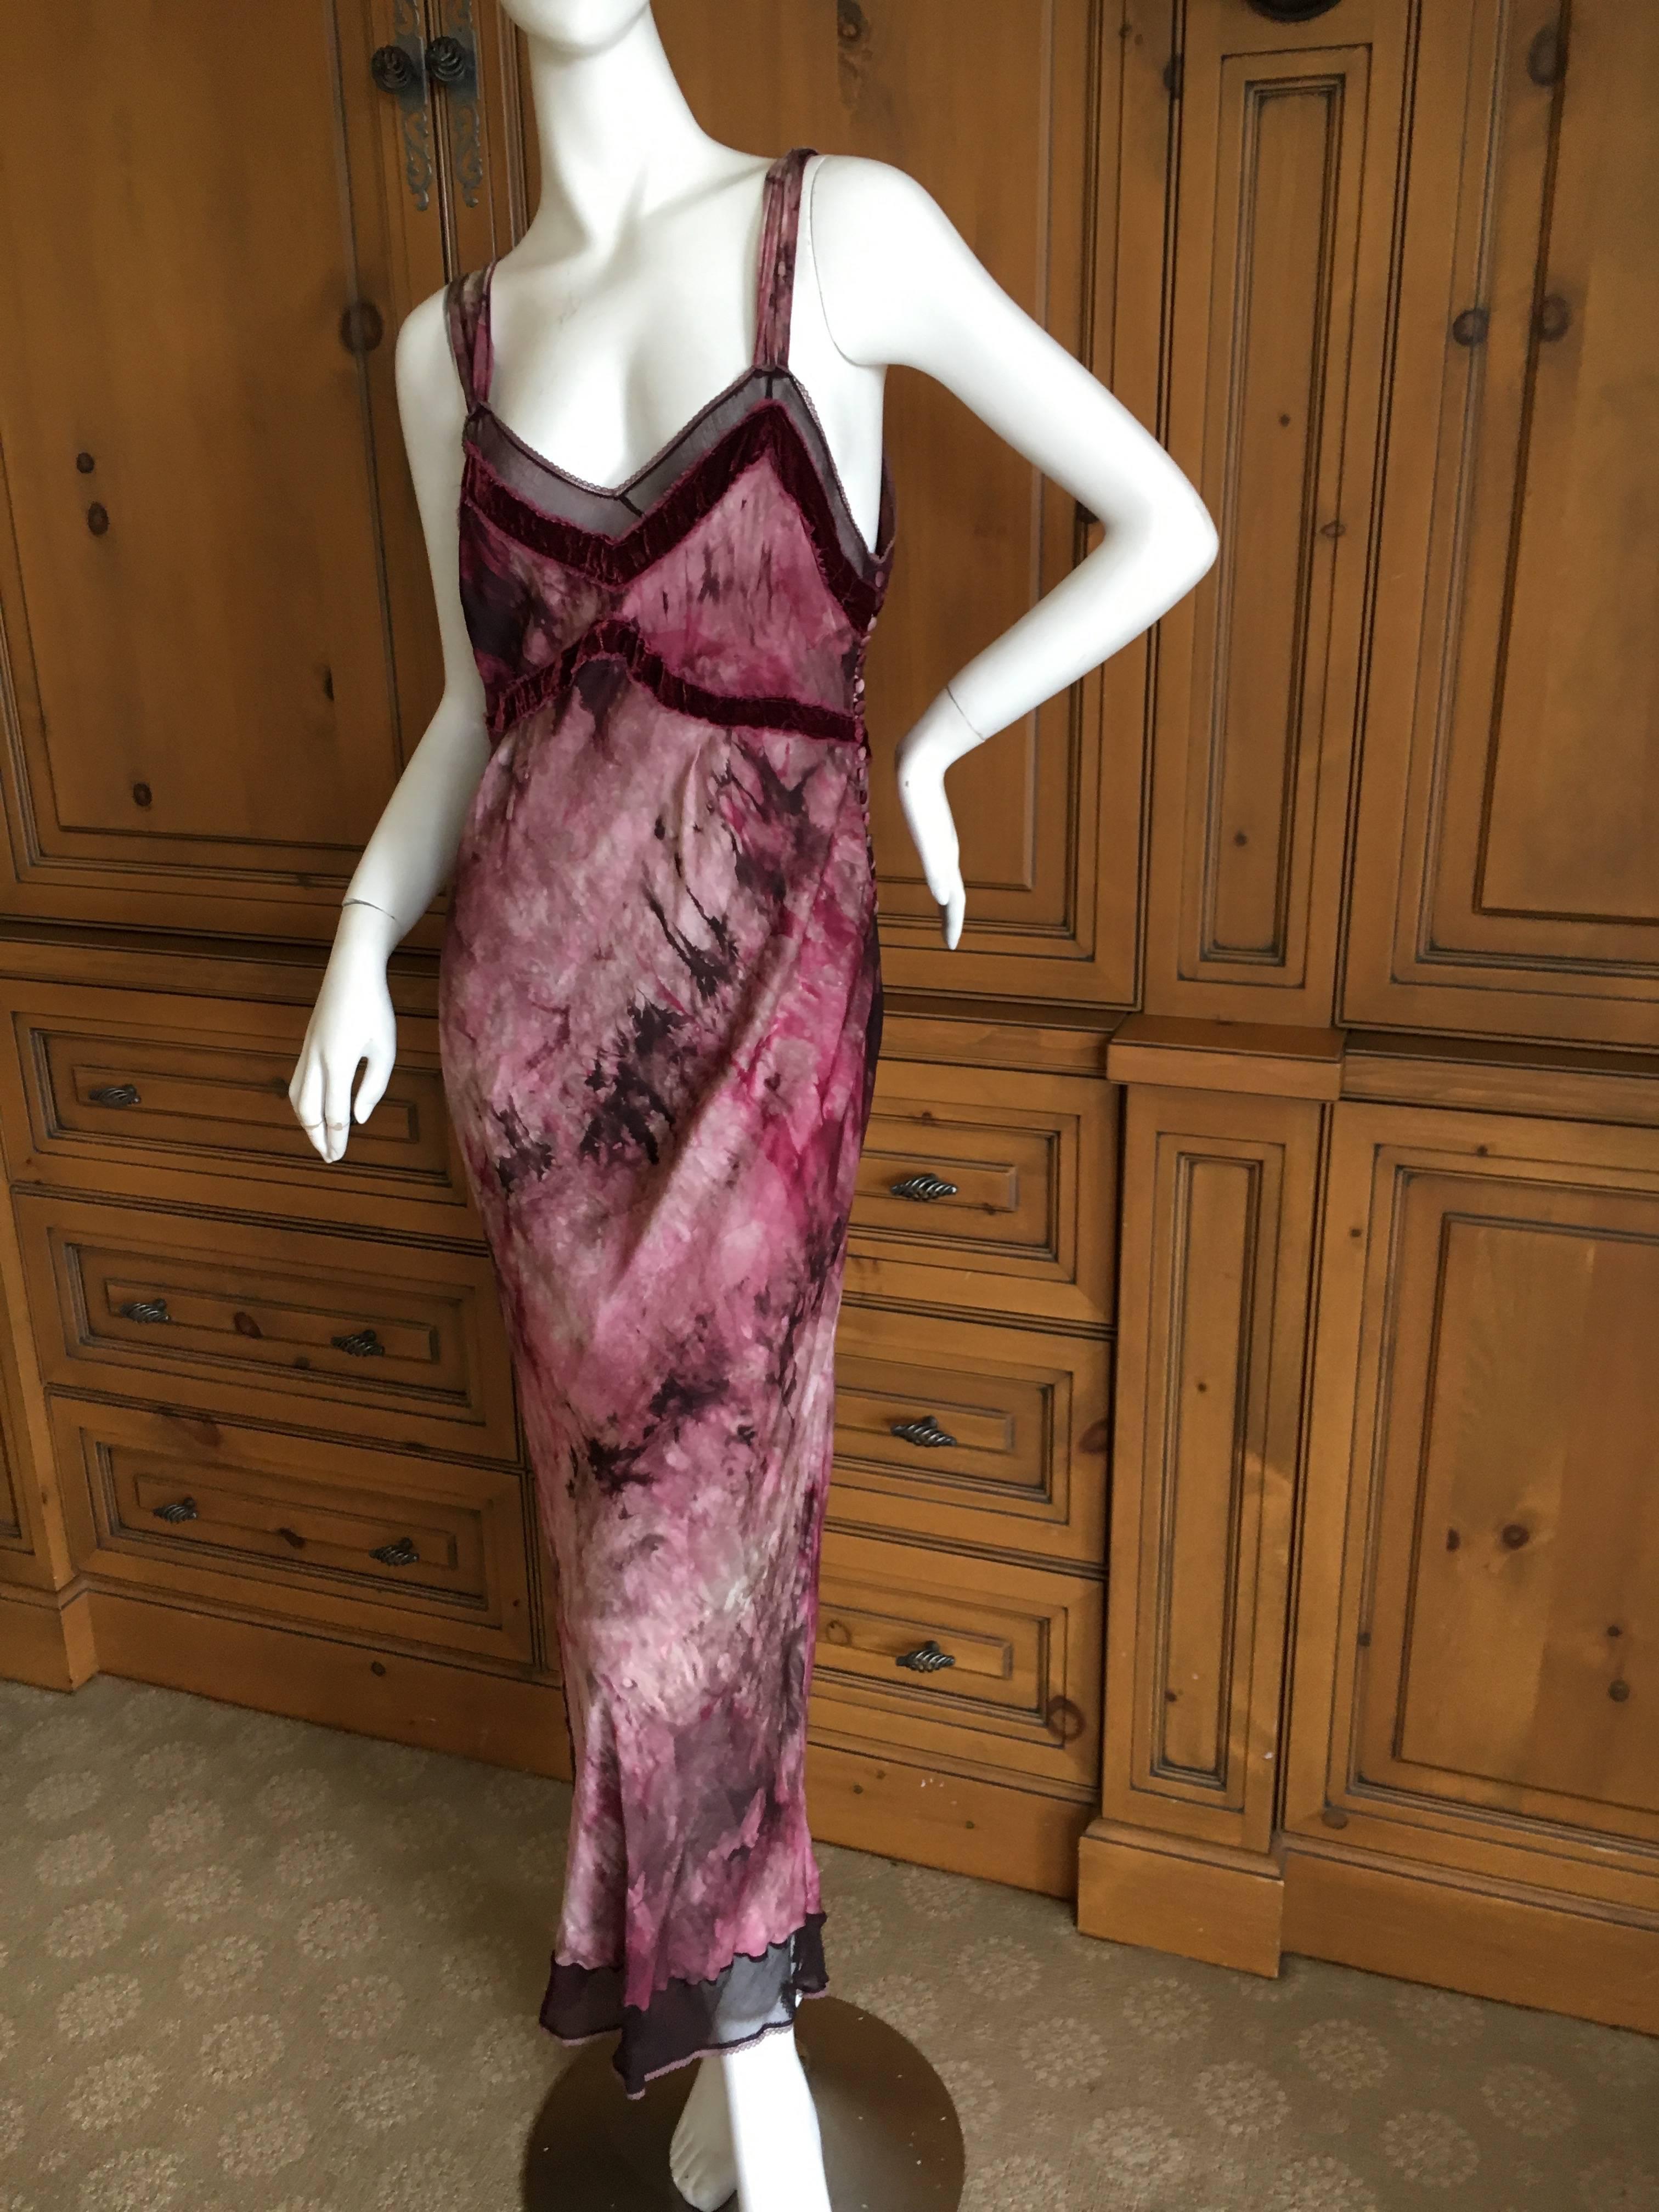 John Galliano 90's Tie Dye Velvet Trim Tea Dress.
Size 46
Bust 40"
Waist 36"
Hips 50"
Length 54"
Excellent condition